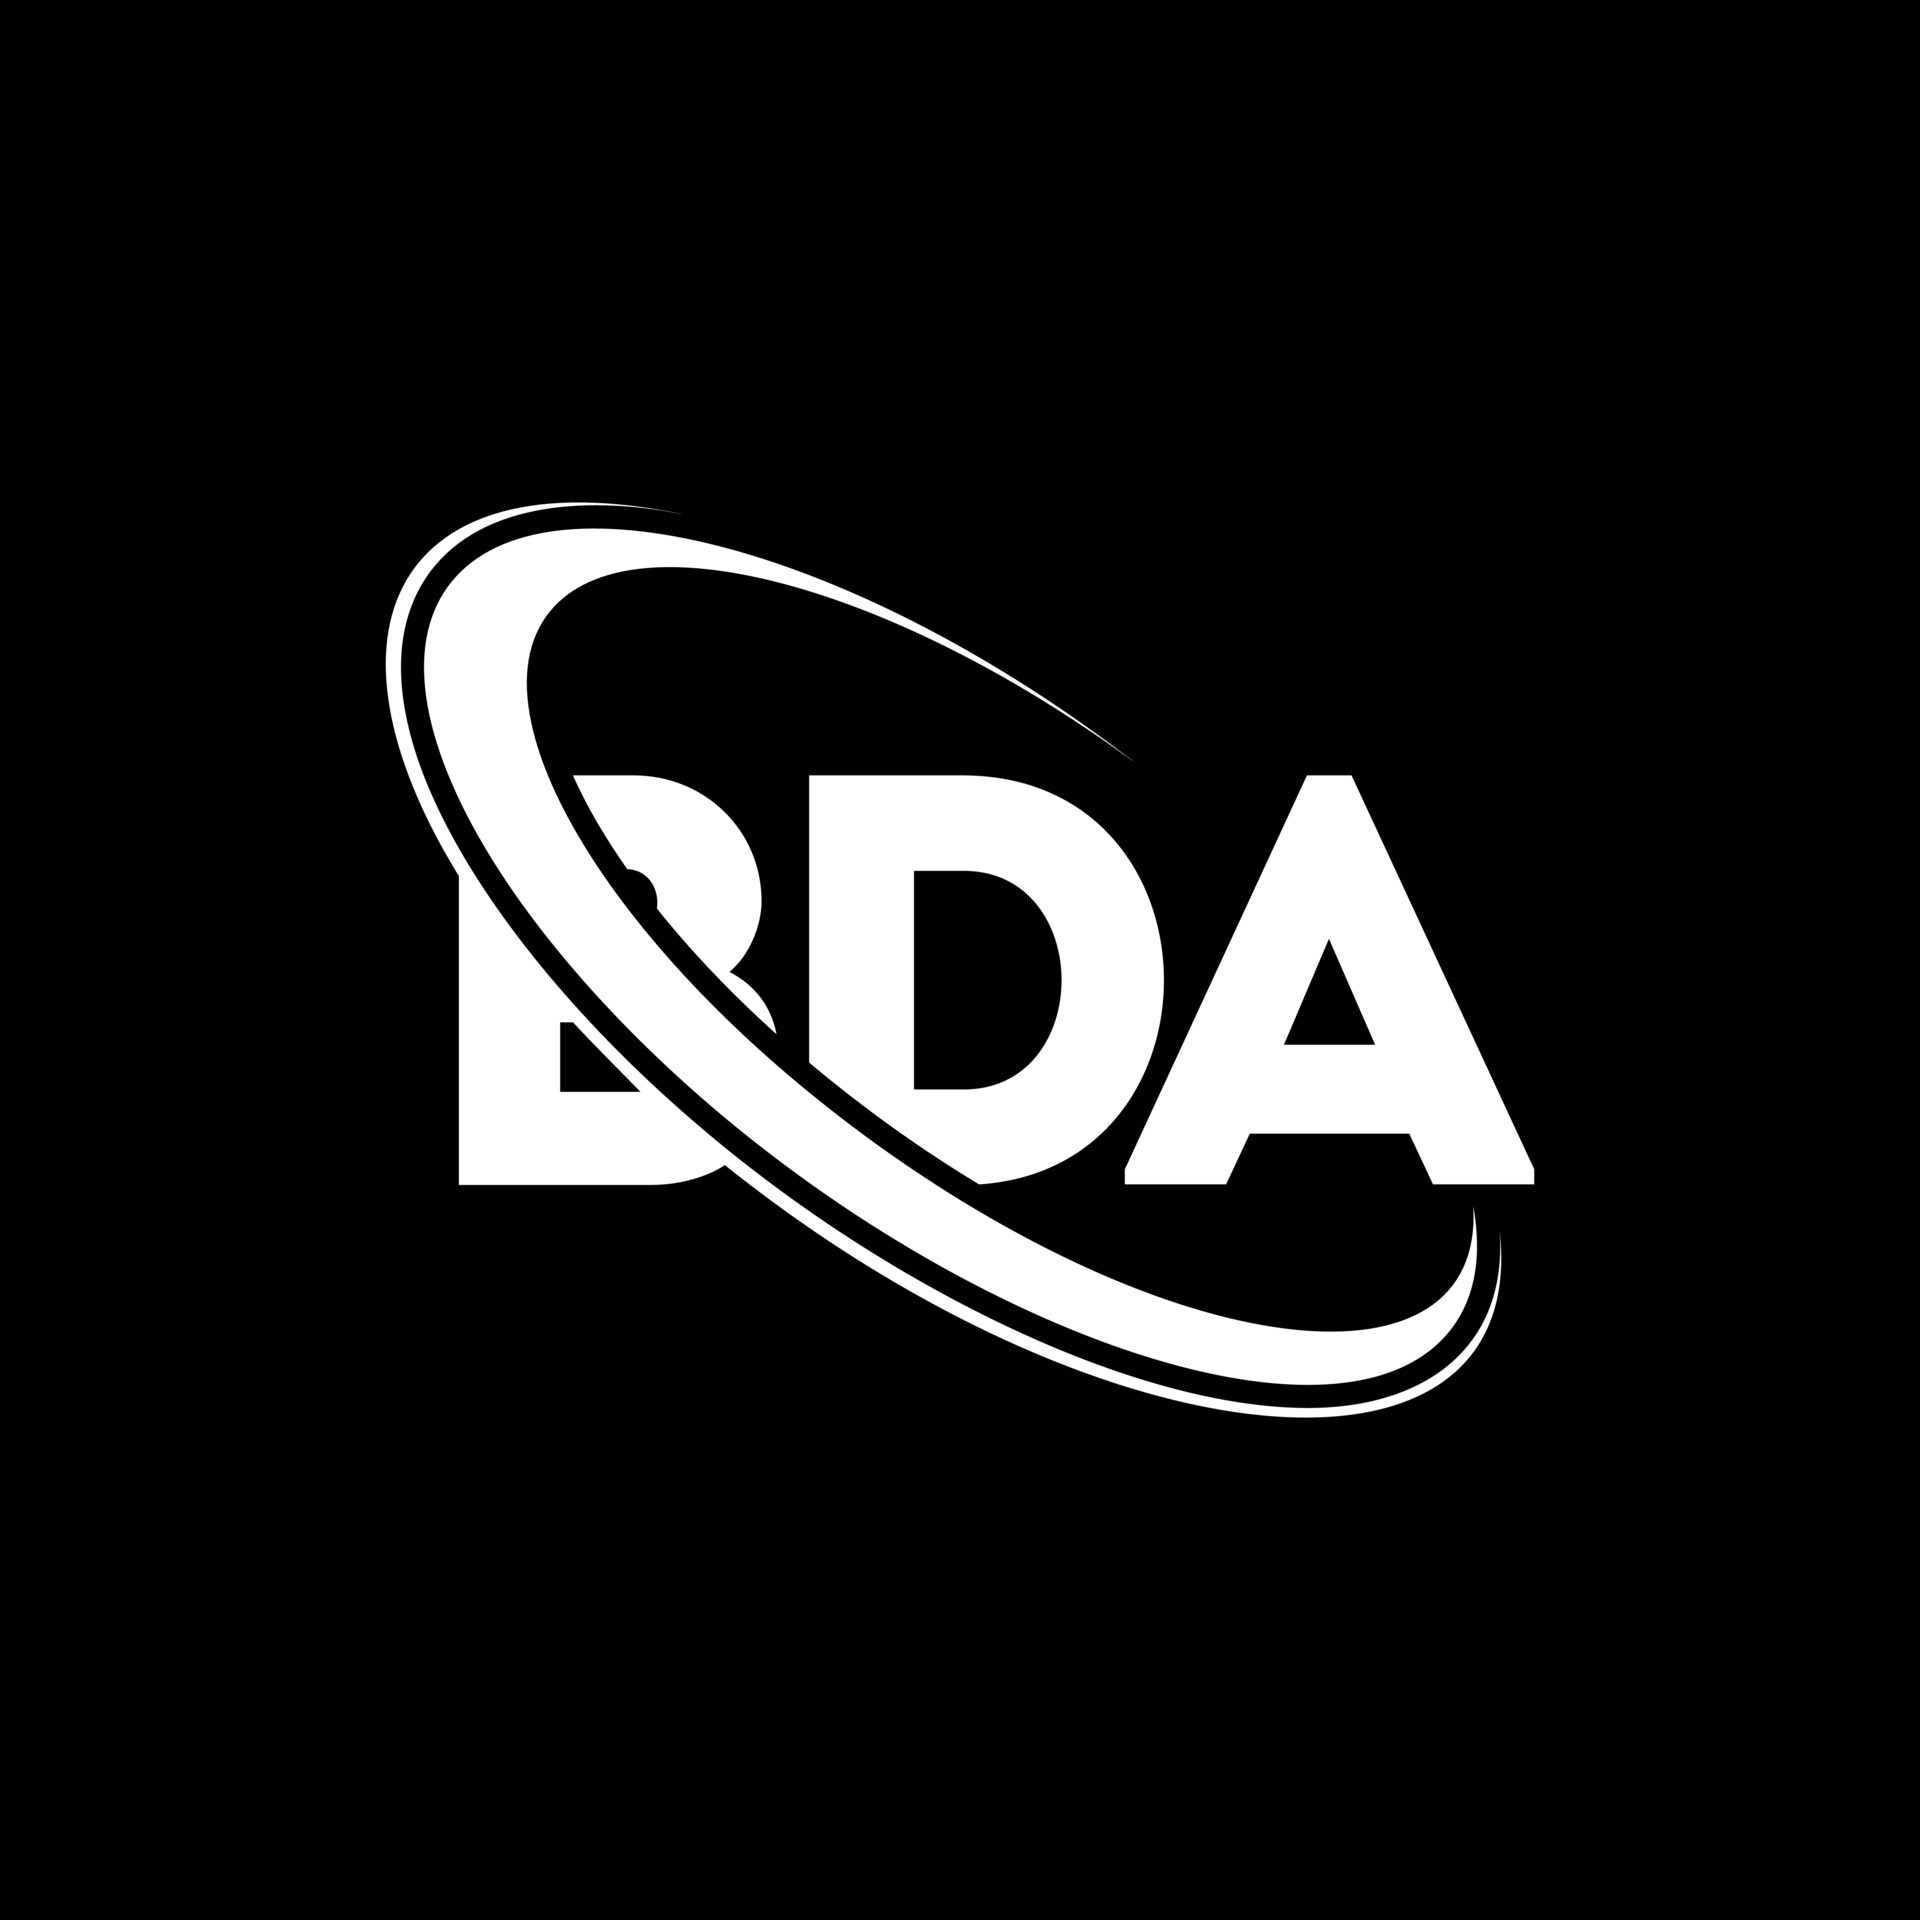 File:British-dietetic-association-bda-logo-vector.svg - Wikipedia